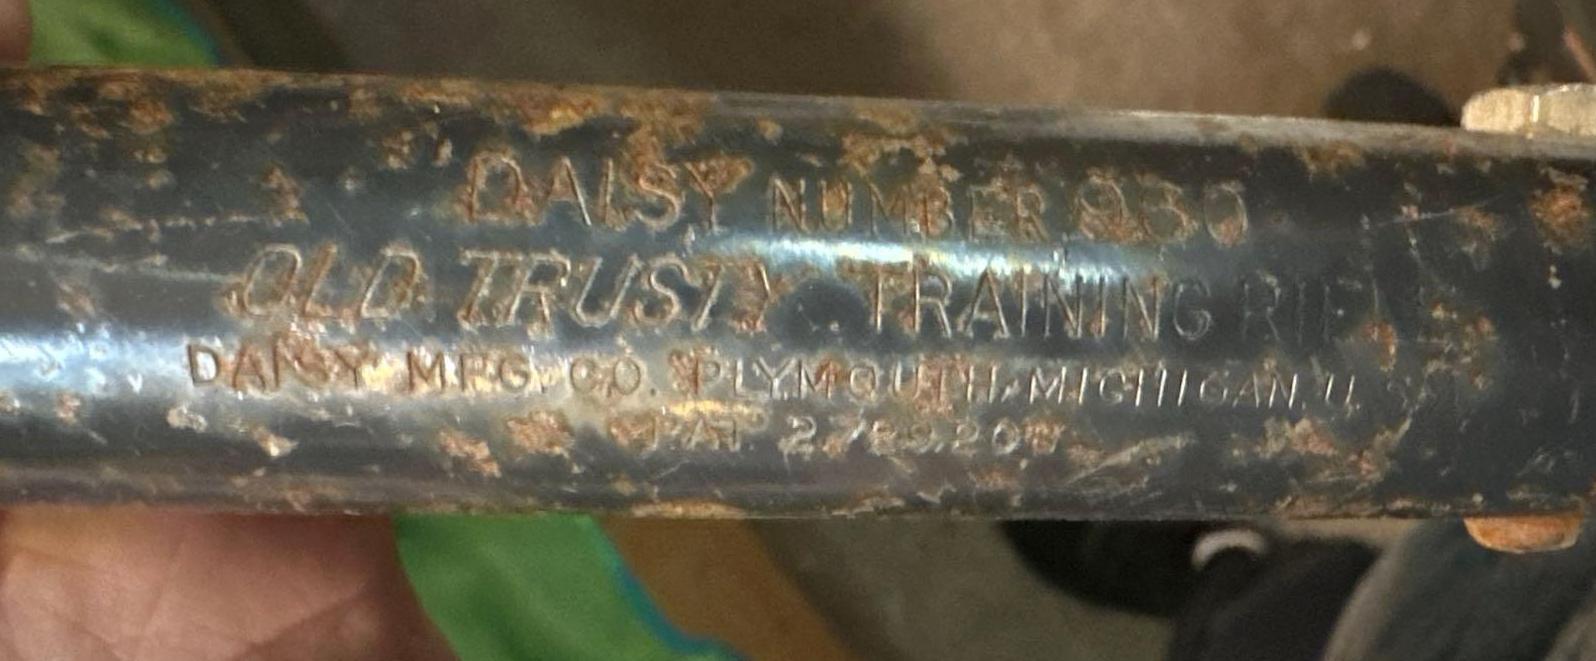 Vintage Daisy Number 960 "Old Trusty Training Rifle" POP Gun